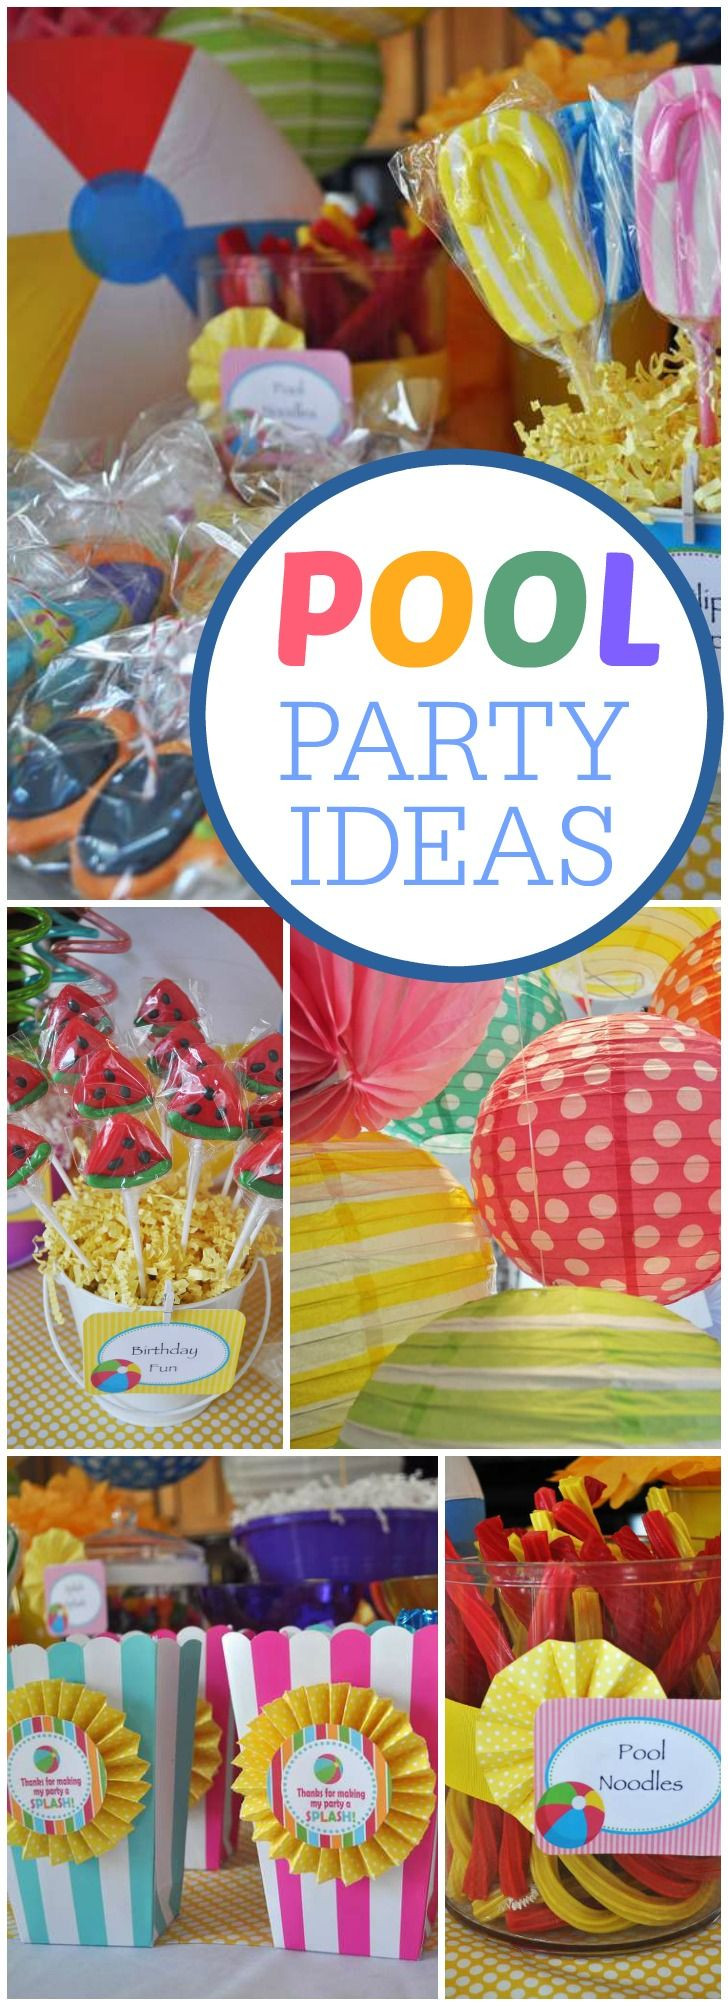 Pool Party Ideas For Birthdays
 Best 25 Pool party birthday ideas on Pinterest